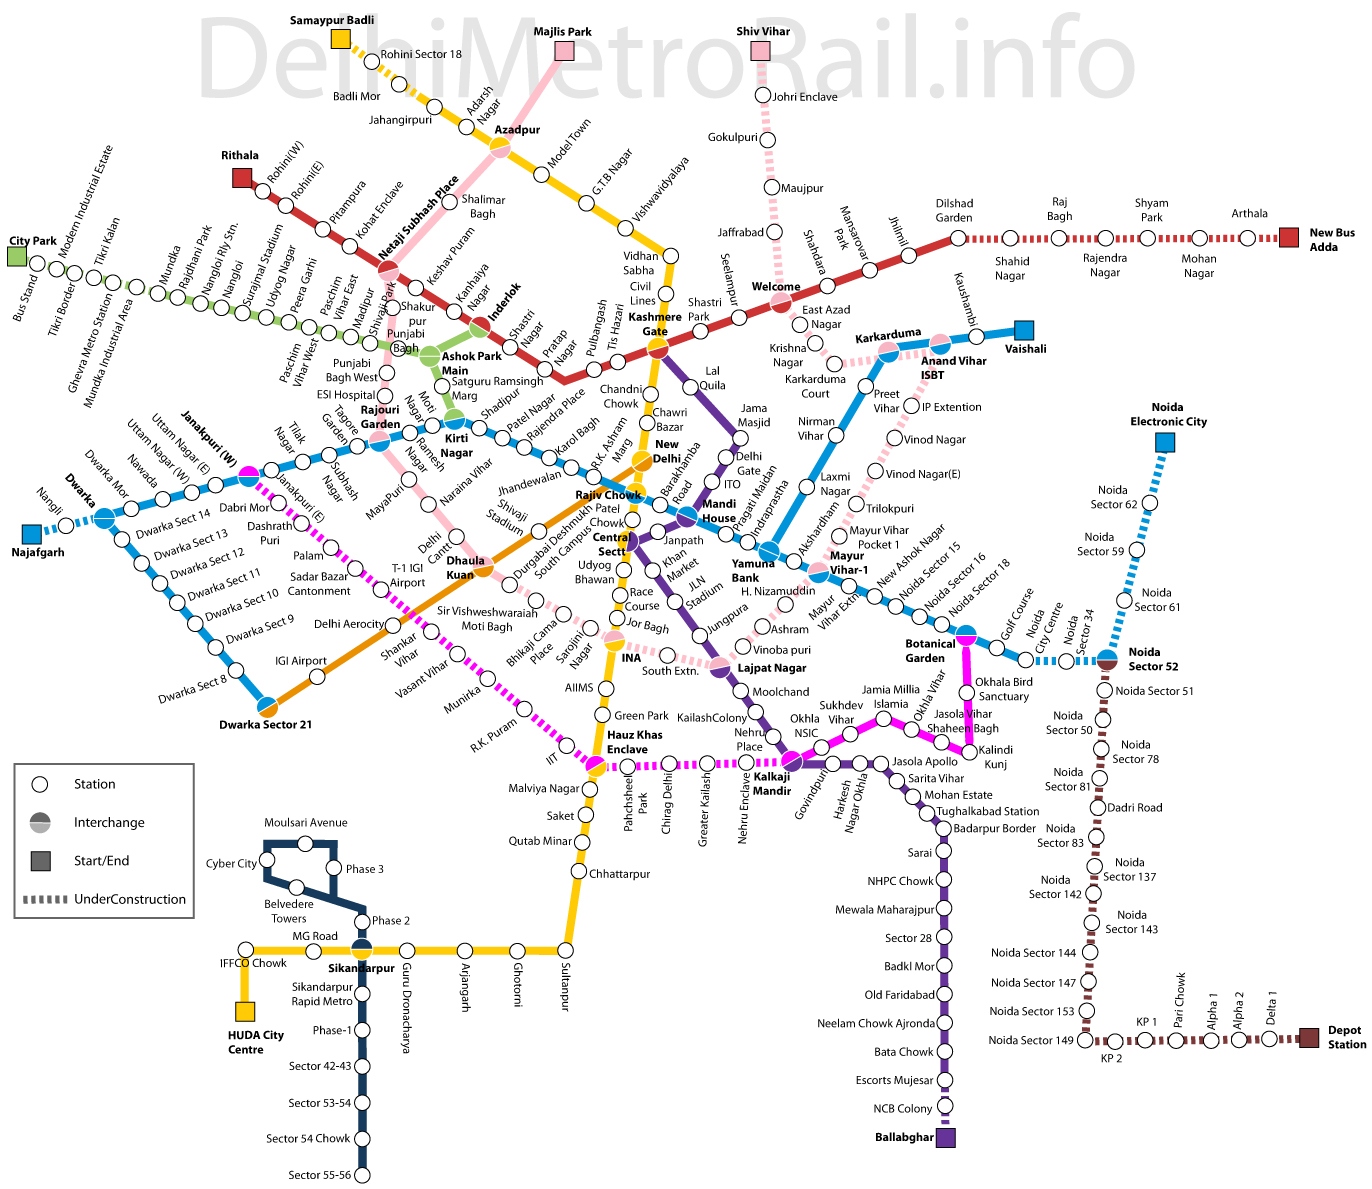 Download Delhi metro map image